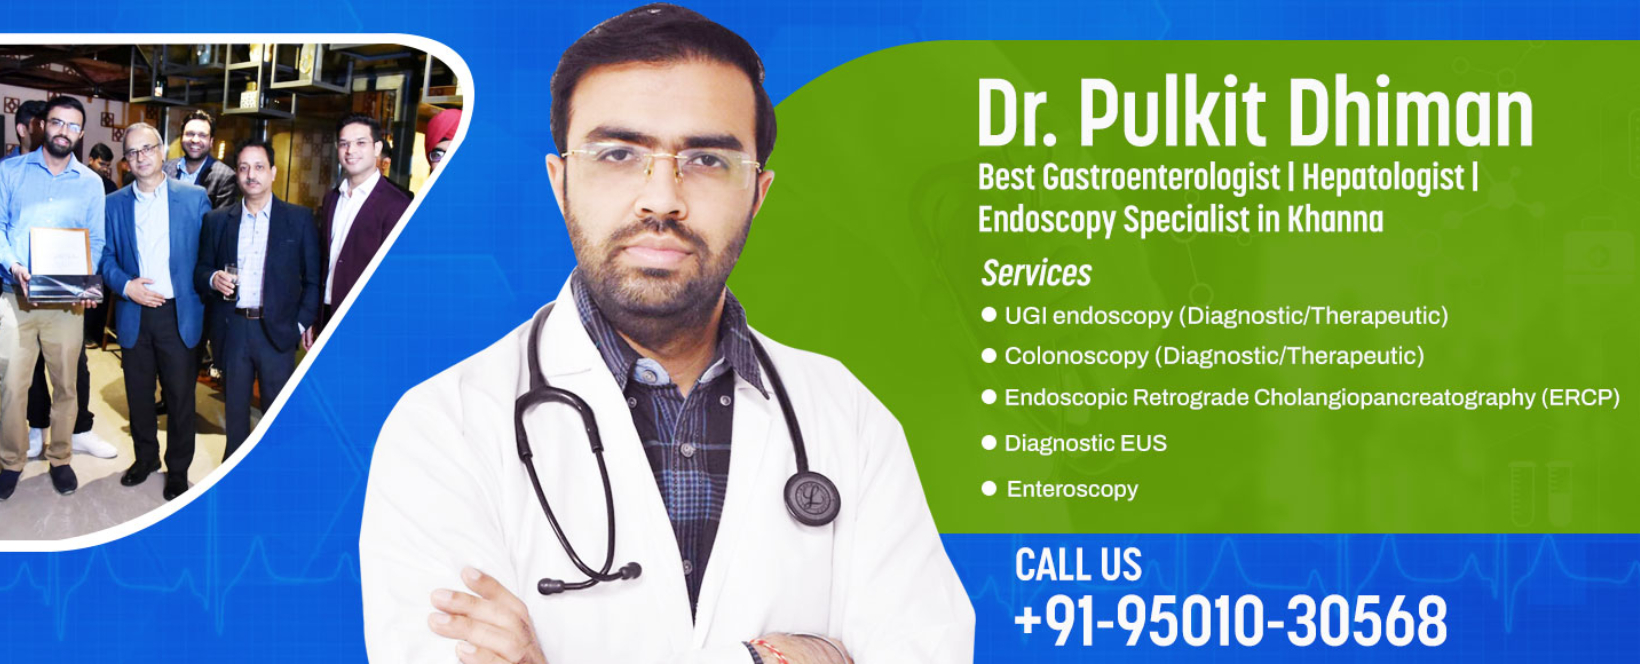 Best Gastroenterologist in Khanna Cover Image